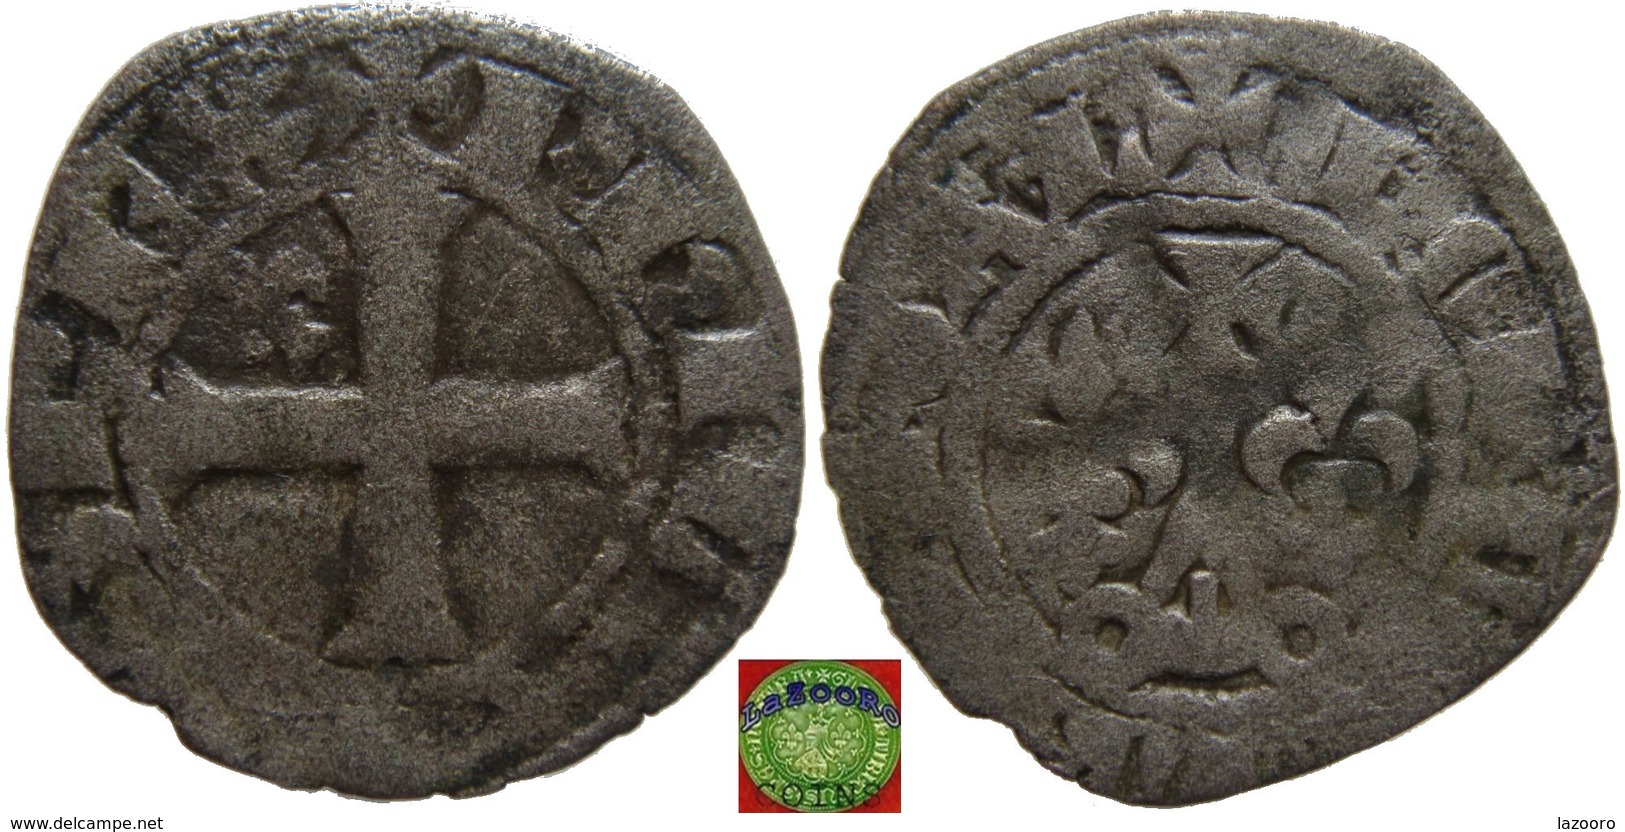 LaZooRo: France - AR Double Tournois Of Philip IV (1285-1314), MON DVPLEX REGAL - Silver - 1285-1314 Philipp IV Der Schöne